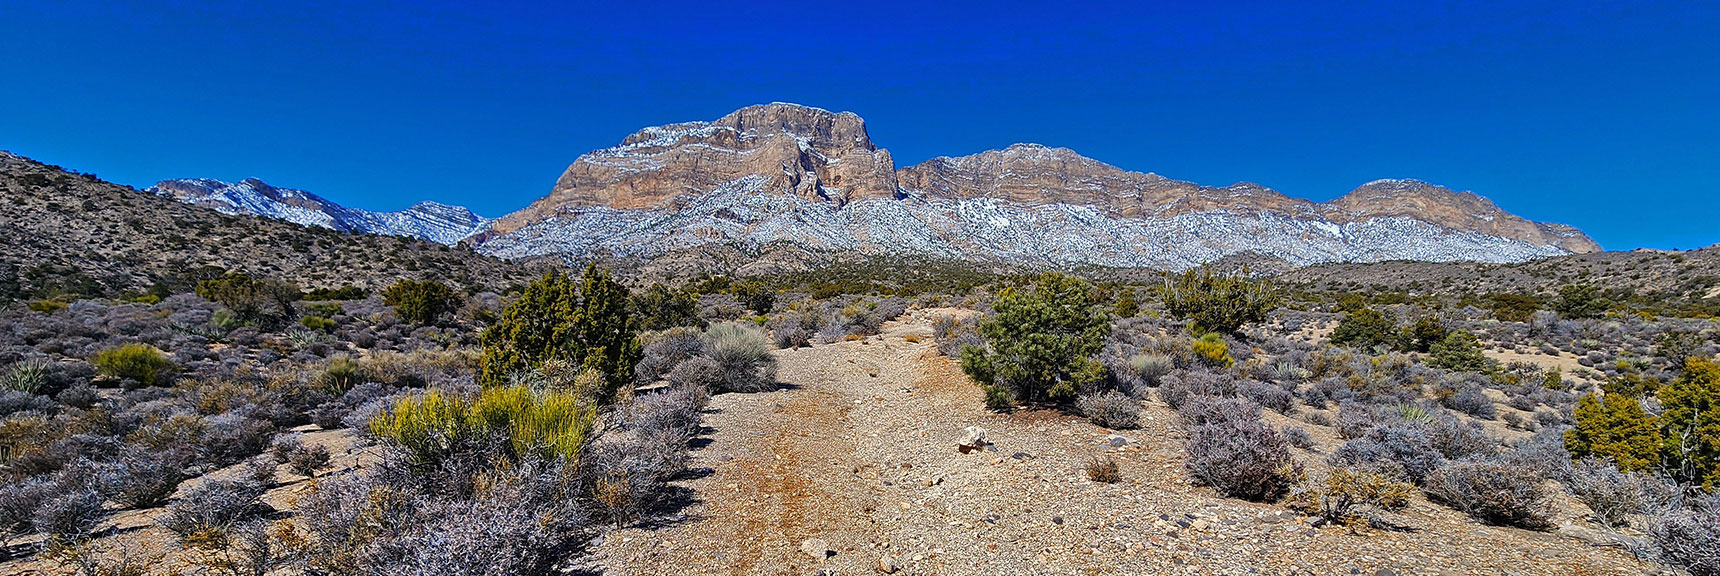 Leave Brownstone Wash, Trail Continues Upward. Target: La Madre Cliffs. | Brownstone Trail | Calico Basin | Brownstone Basin | La Madre Mountains Wilderness, Nevada